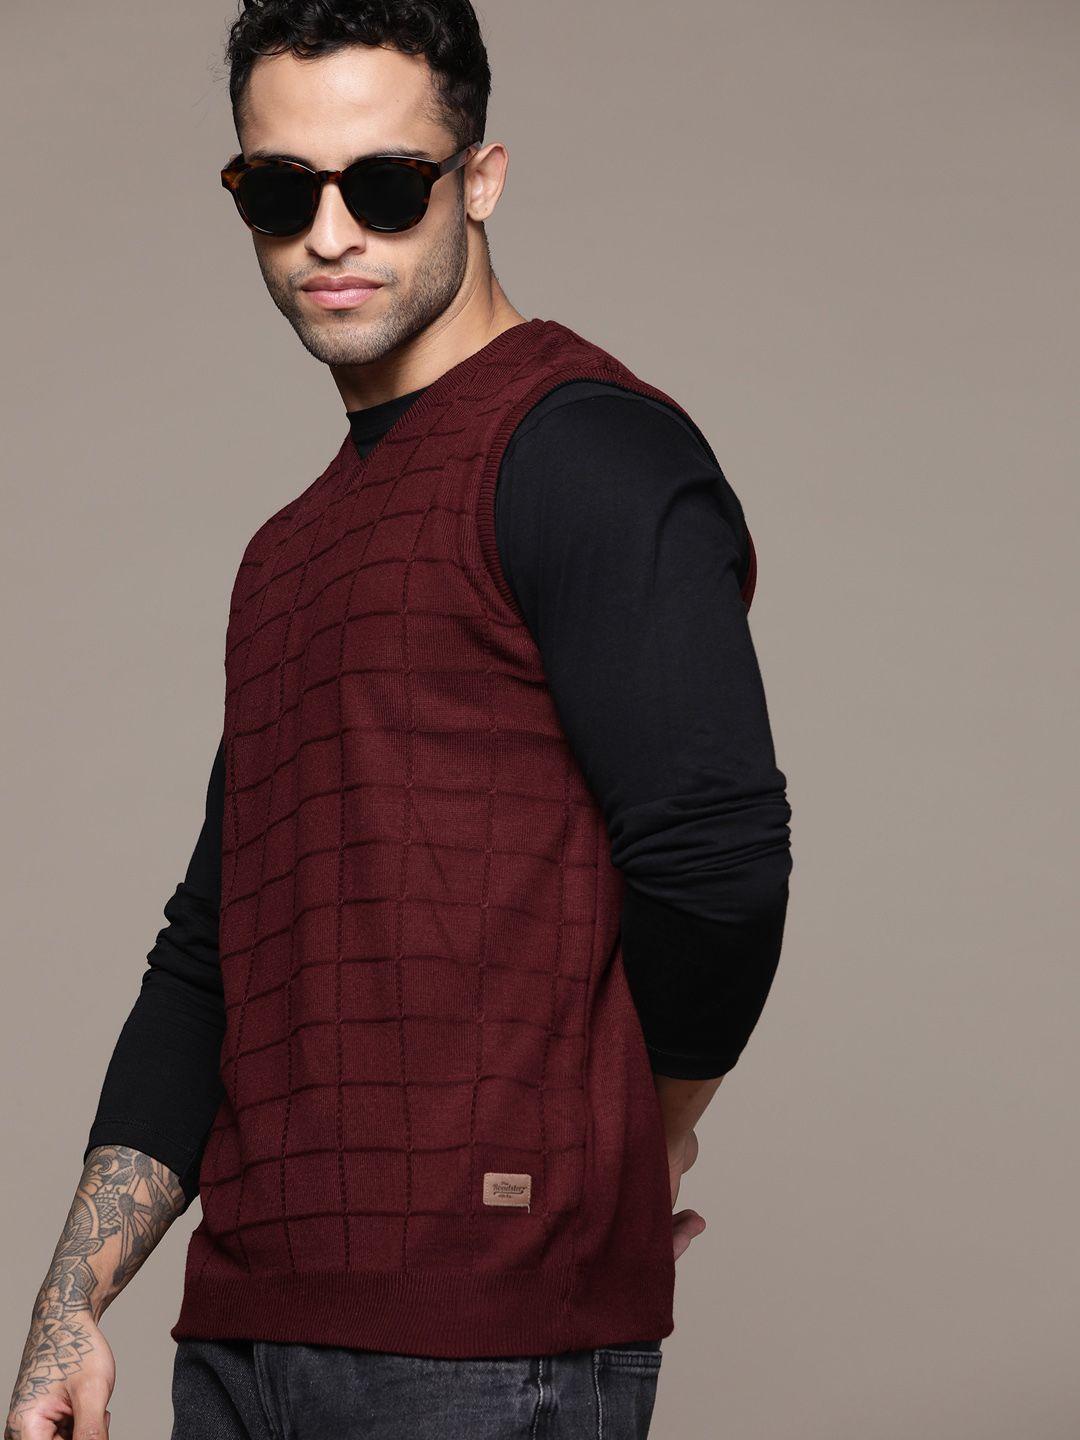 roadster-men-geometric-design-pullover-sweater-vest